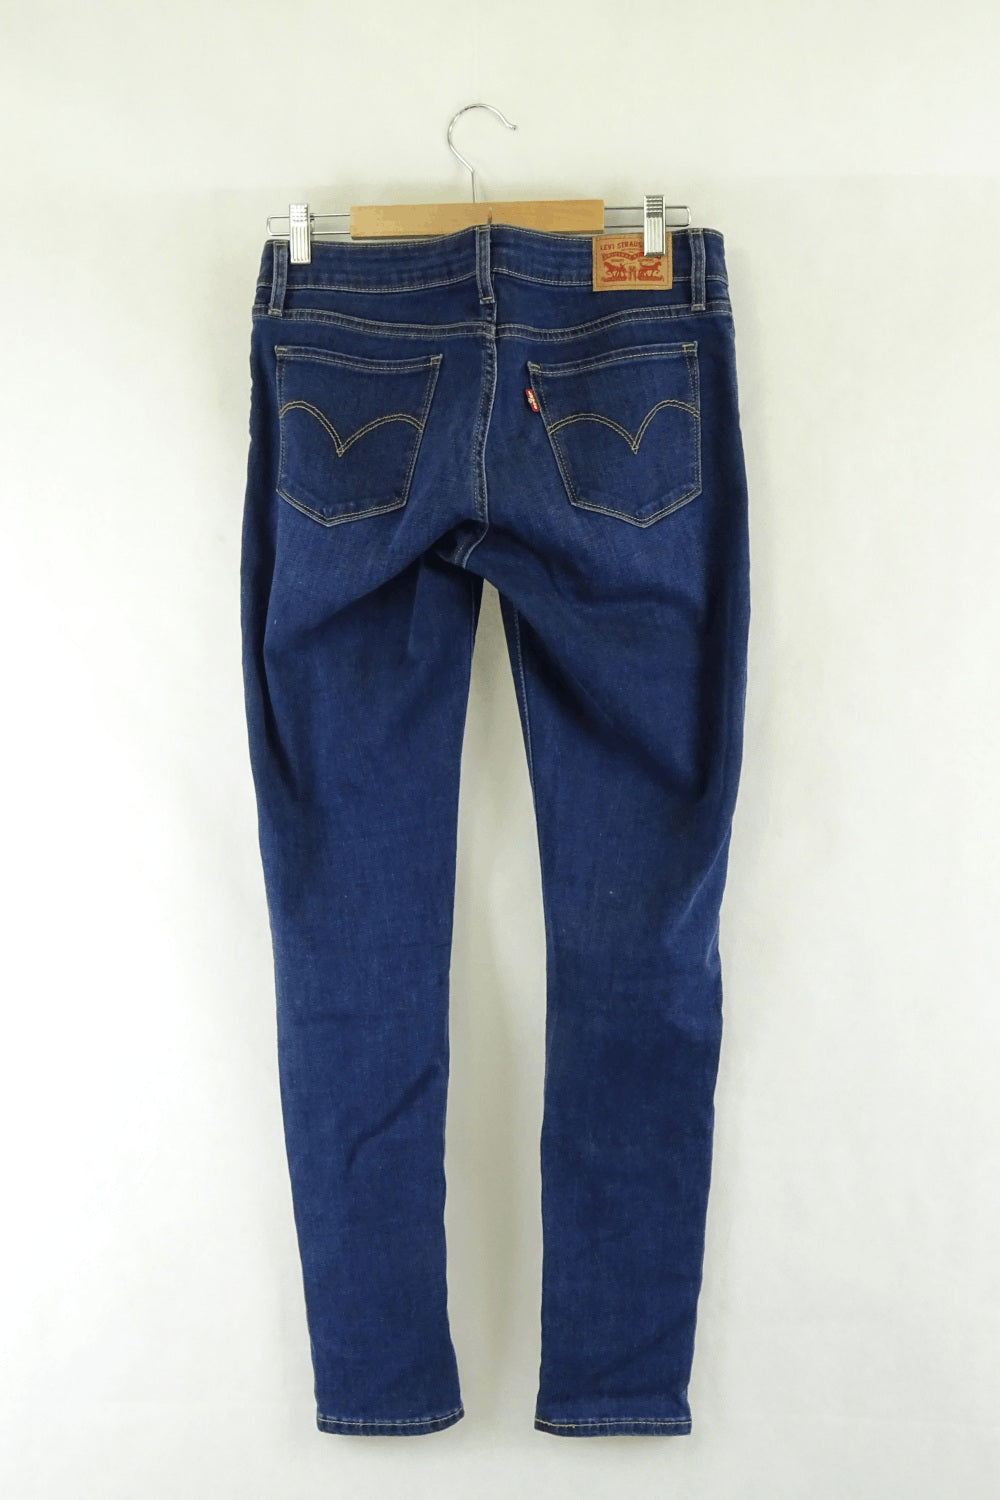 Levis 711 Blue Skinny Jeans 8